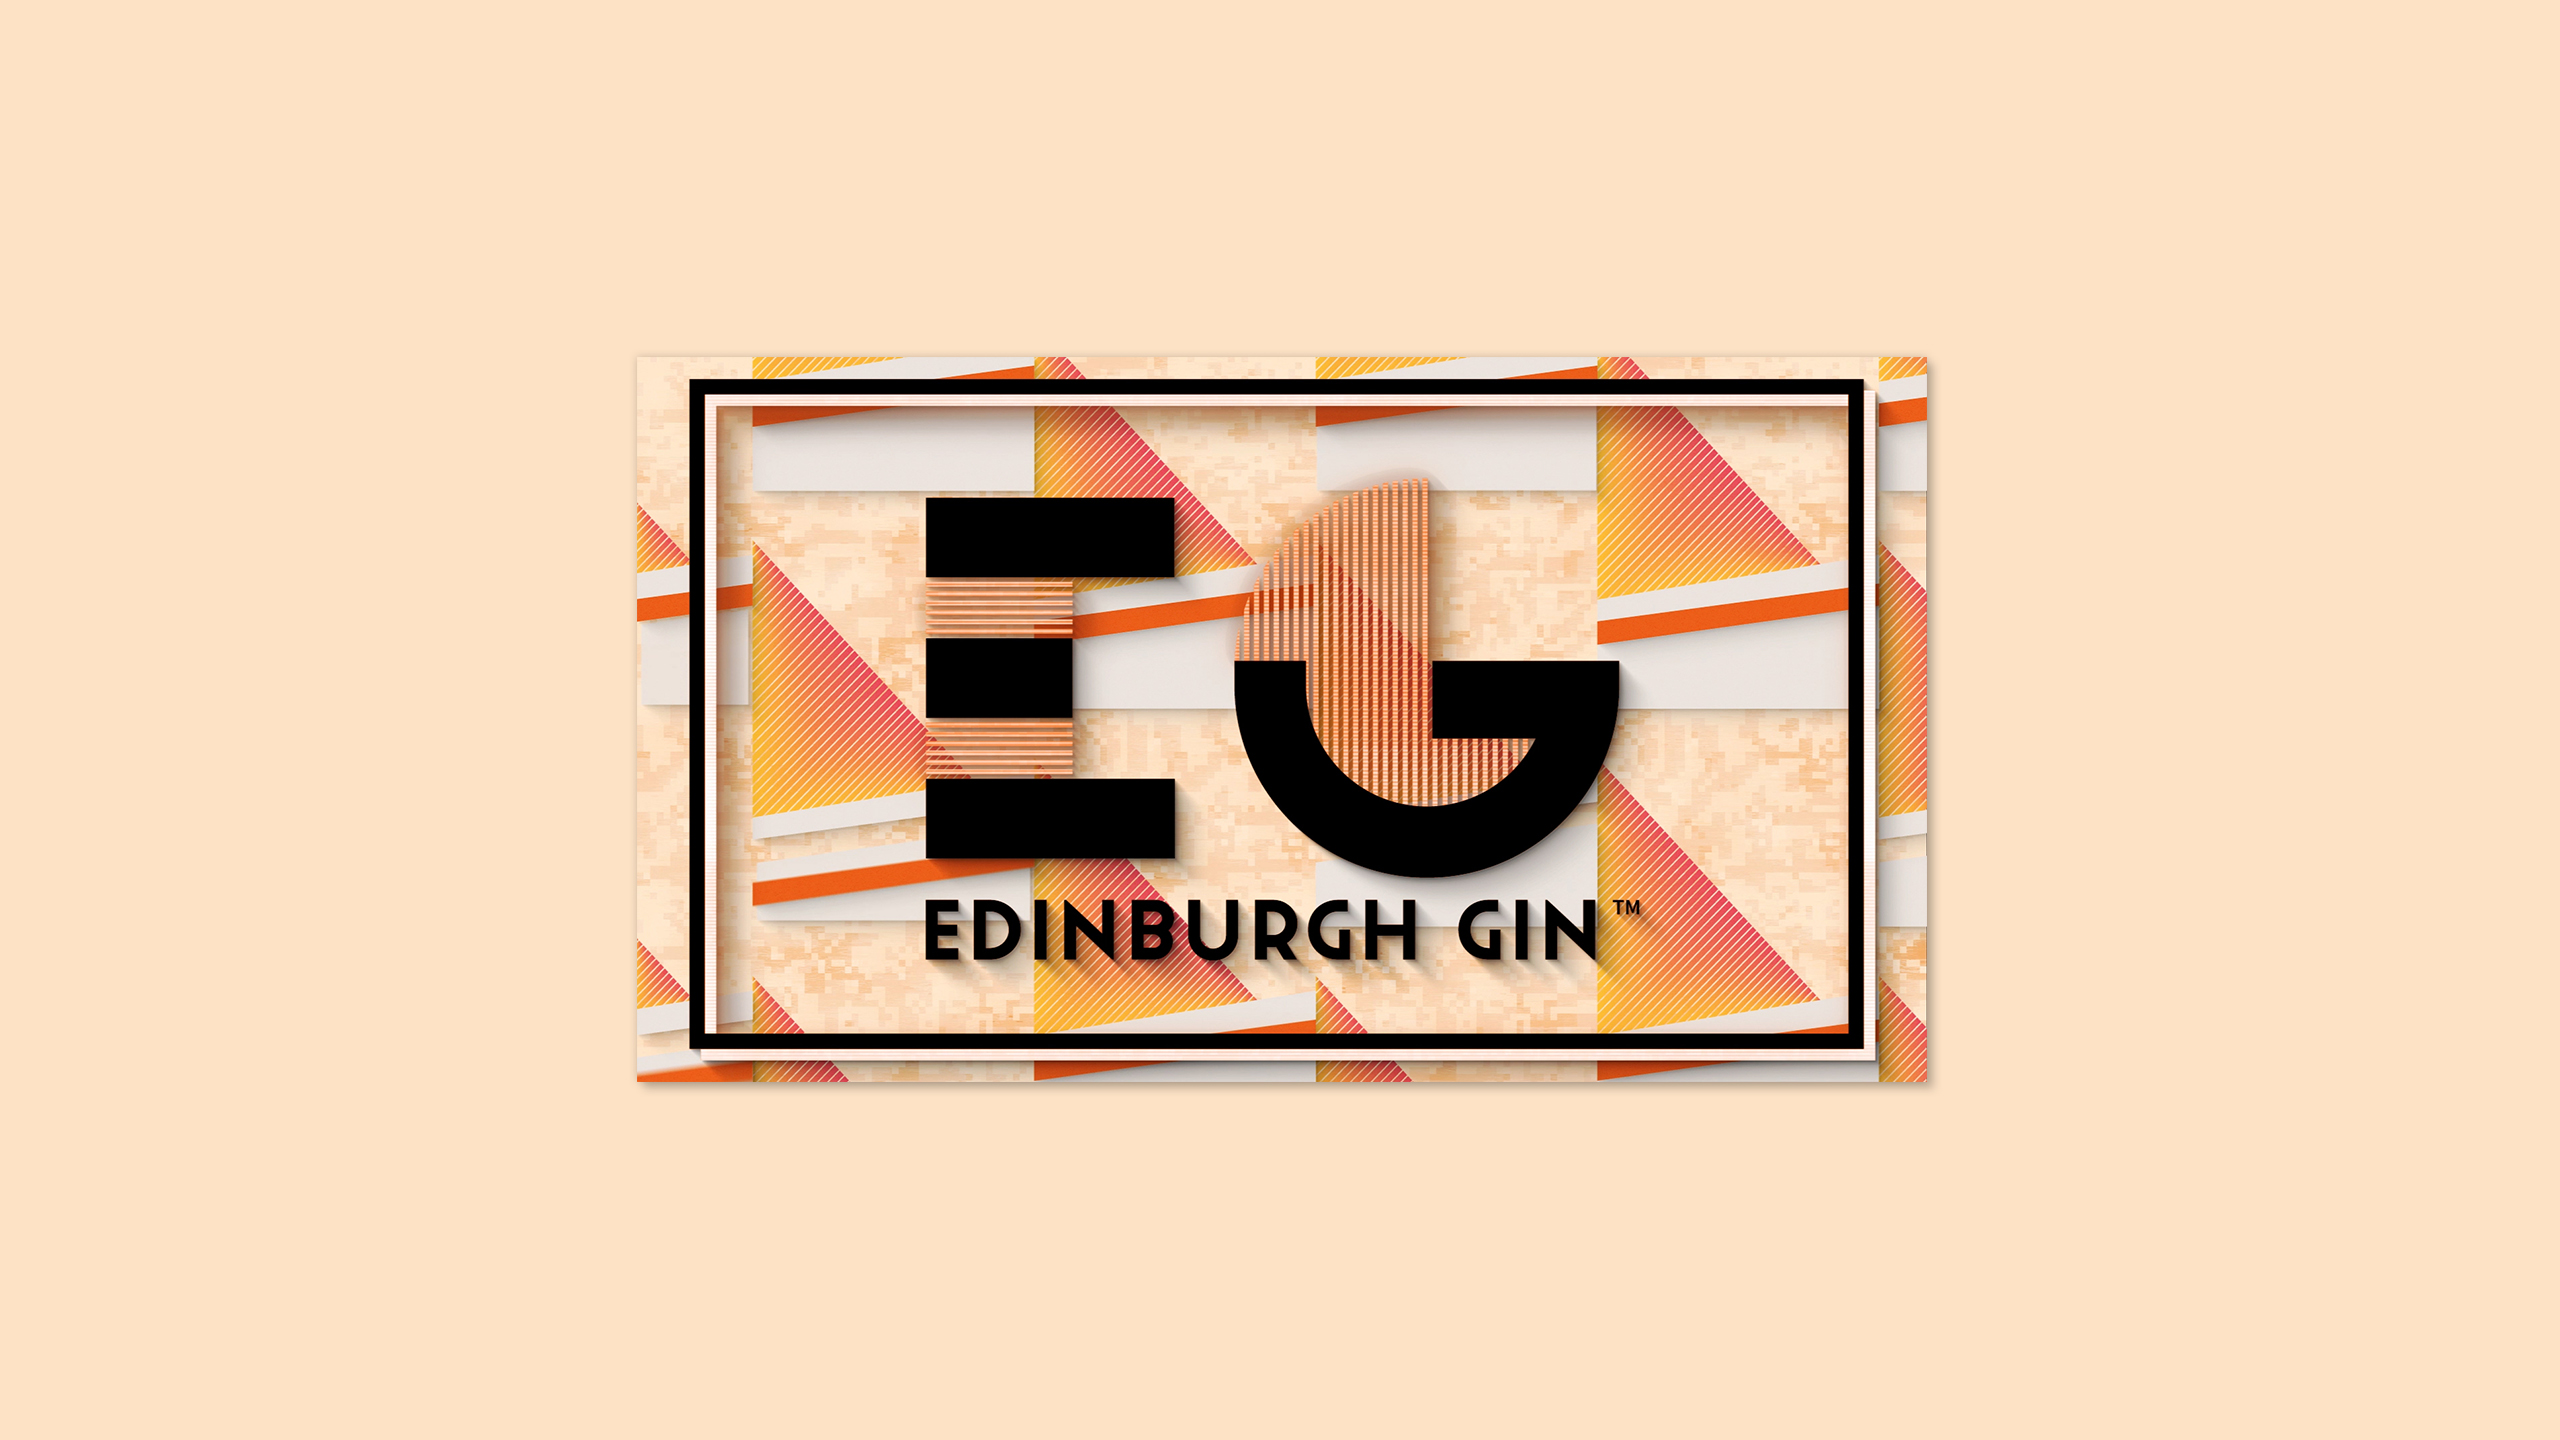 Edinburgh Gin Festival Cocktail Menu menu designed by Dephined